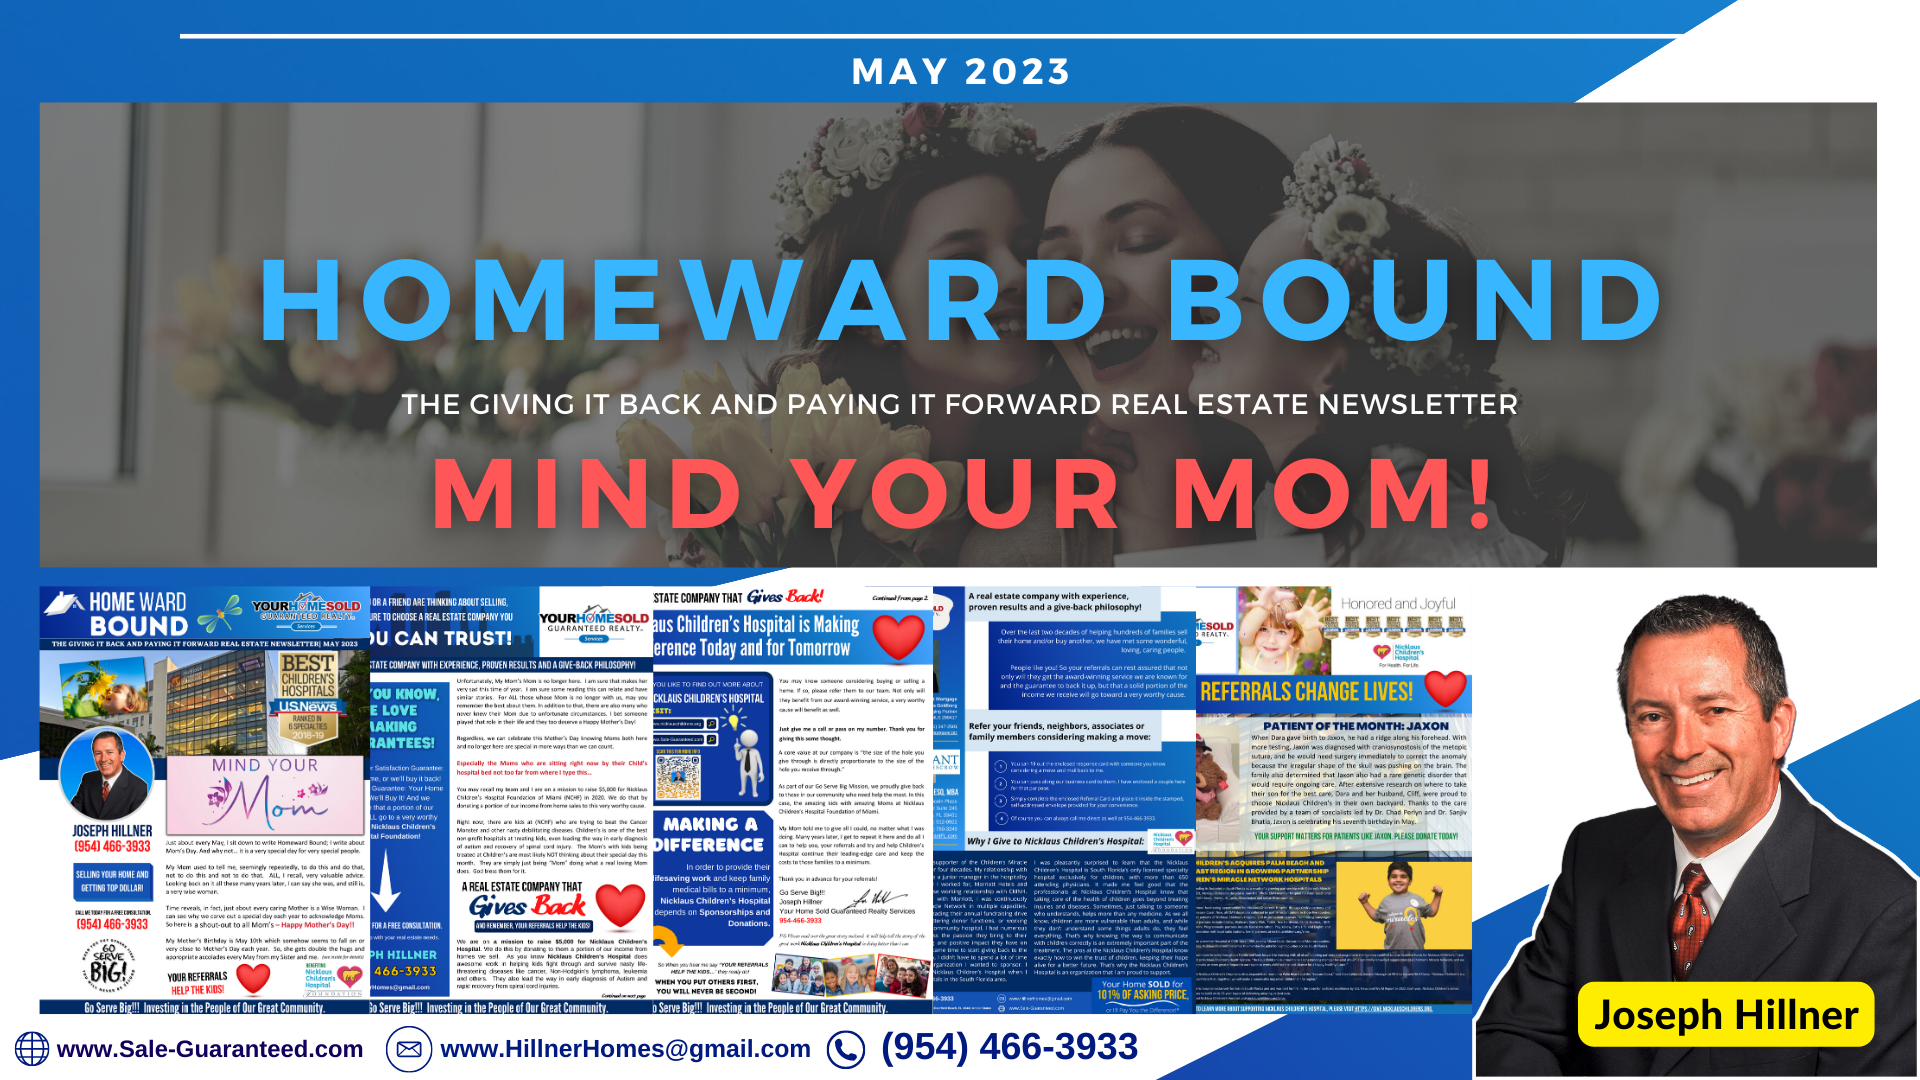 Mind Your Mom! | May 2023 Homeward Bound Newsletter